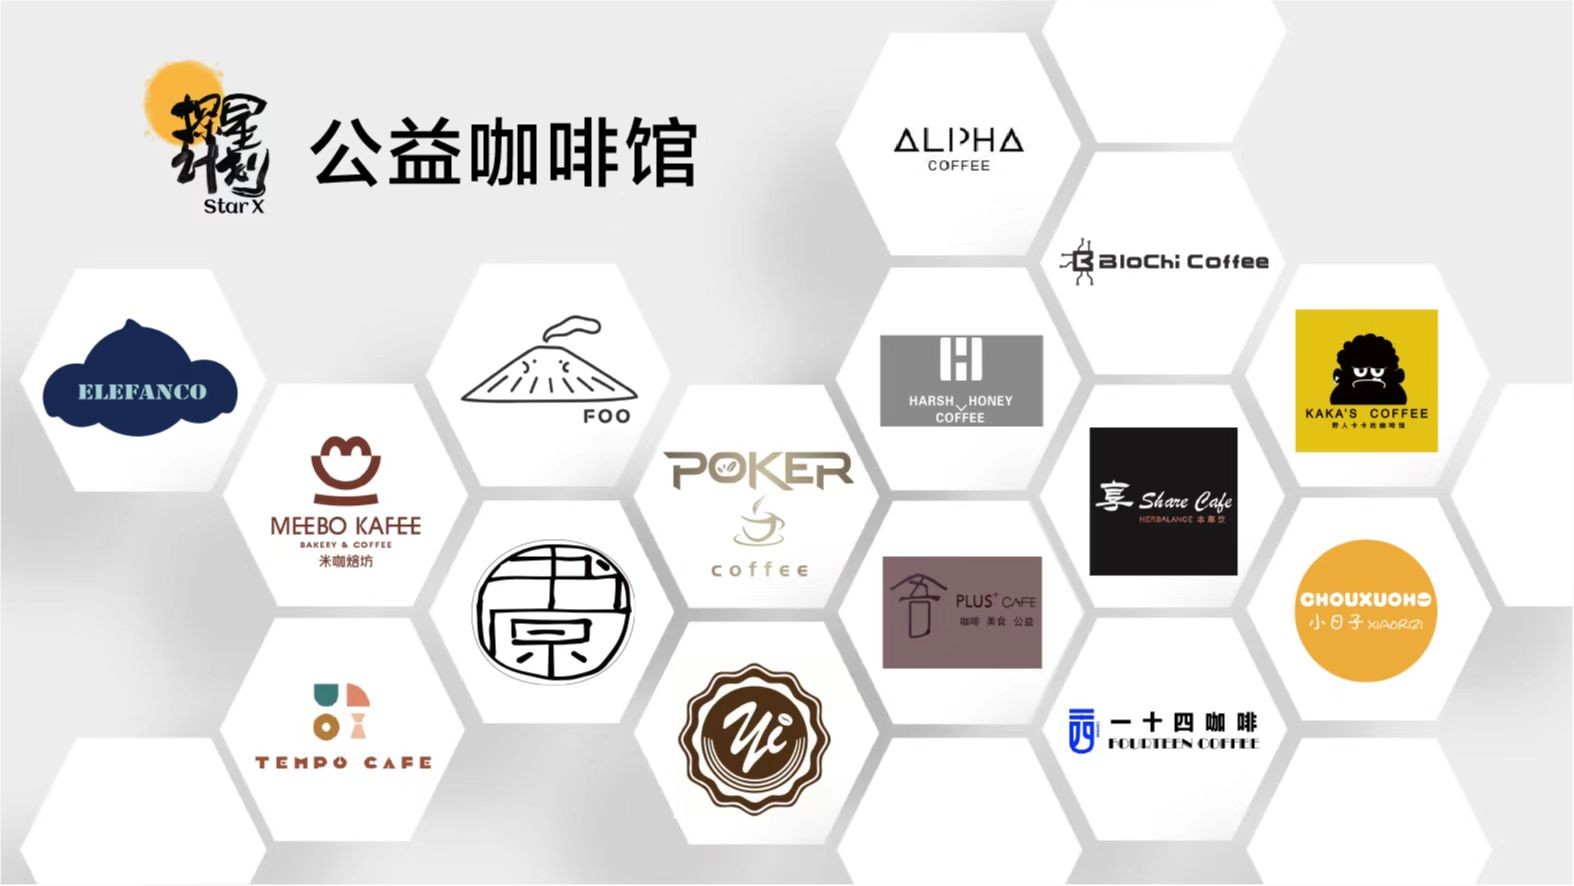 Star X 探星计划 “100家咖啡馆共建100面墙”公益联展在上海启幕